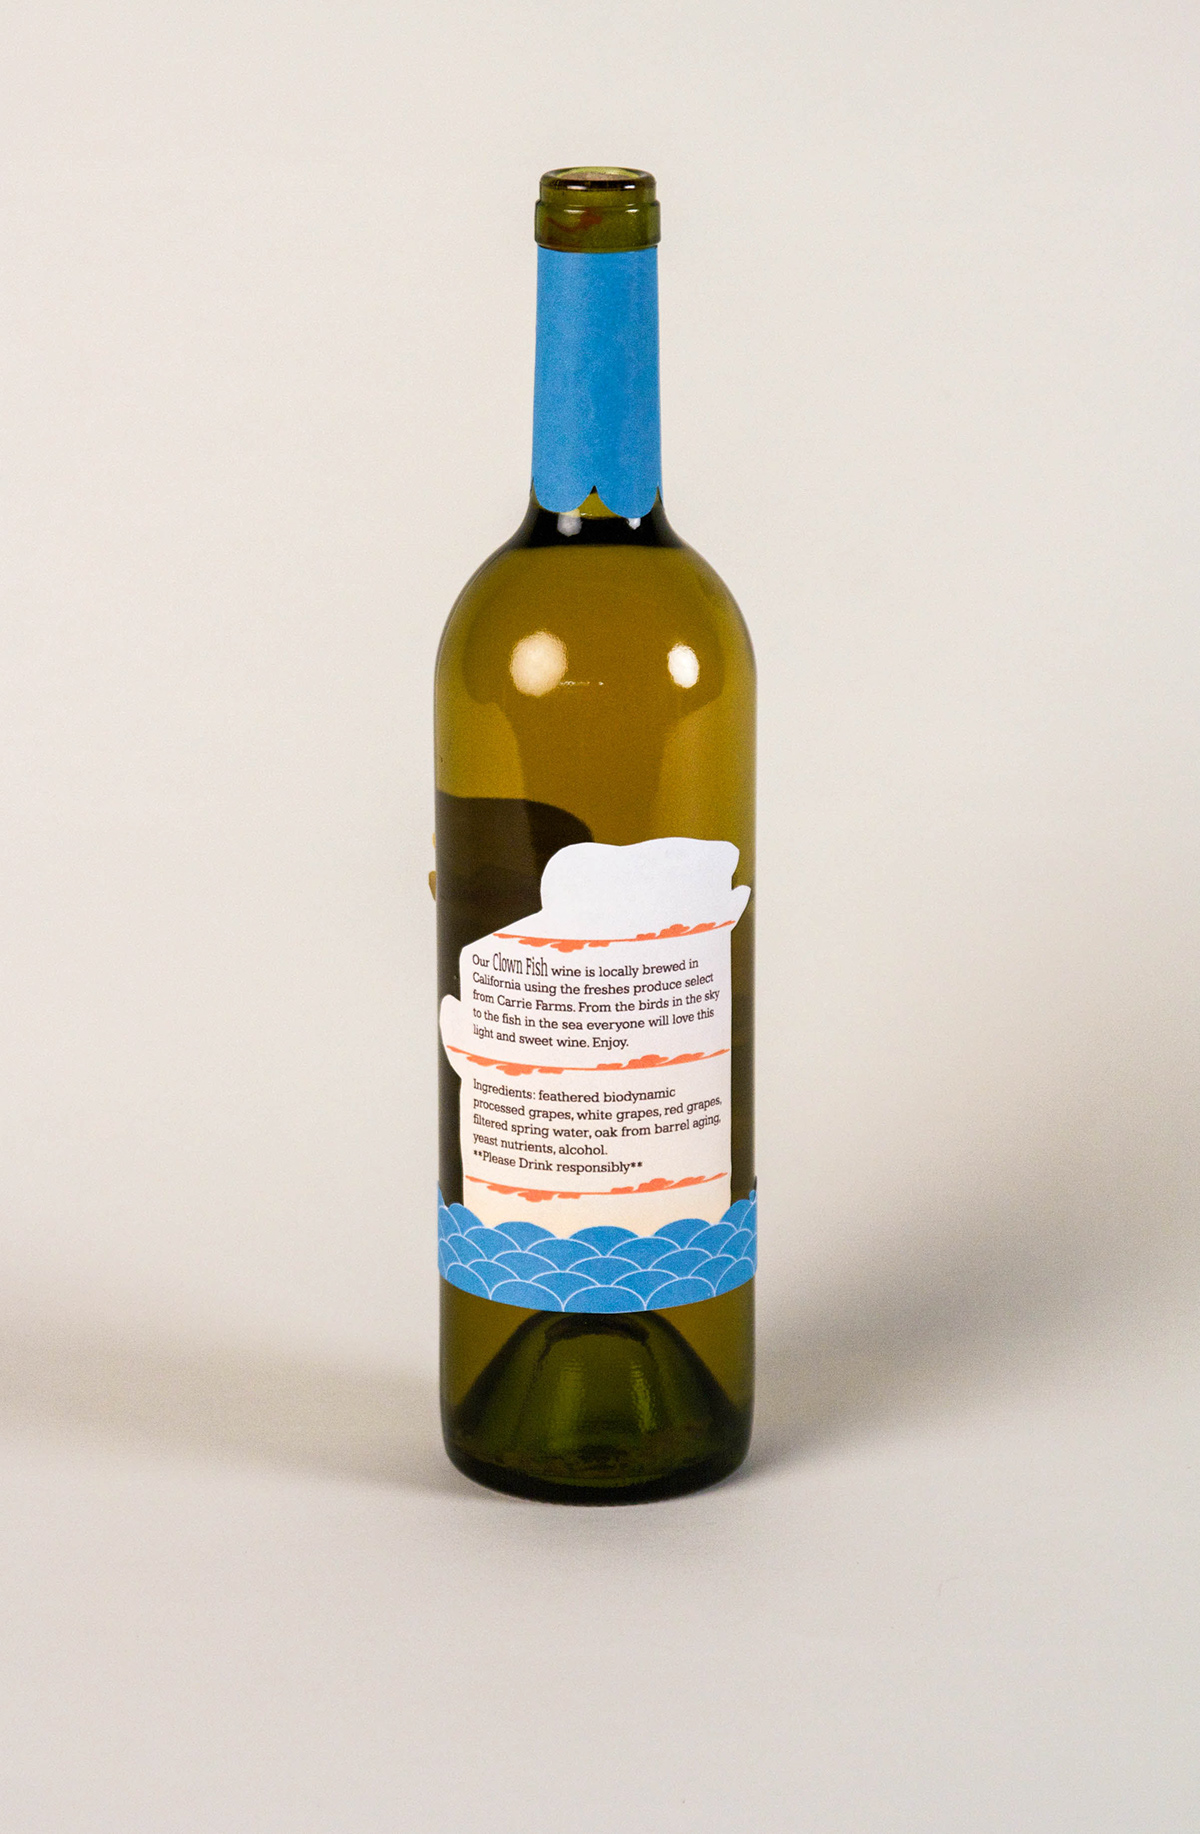 wine Label clown fish cutout